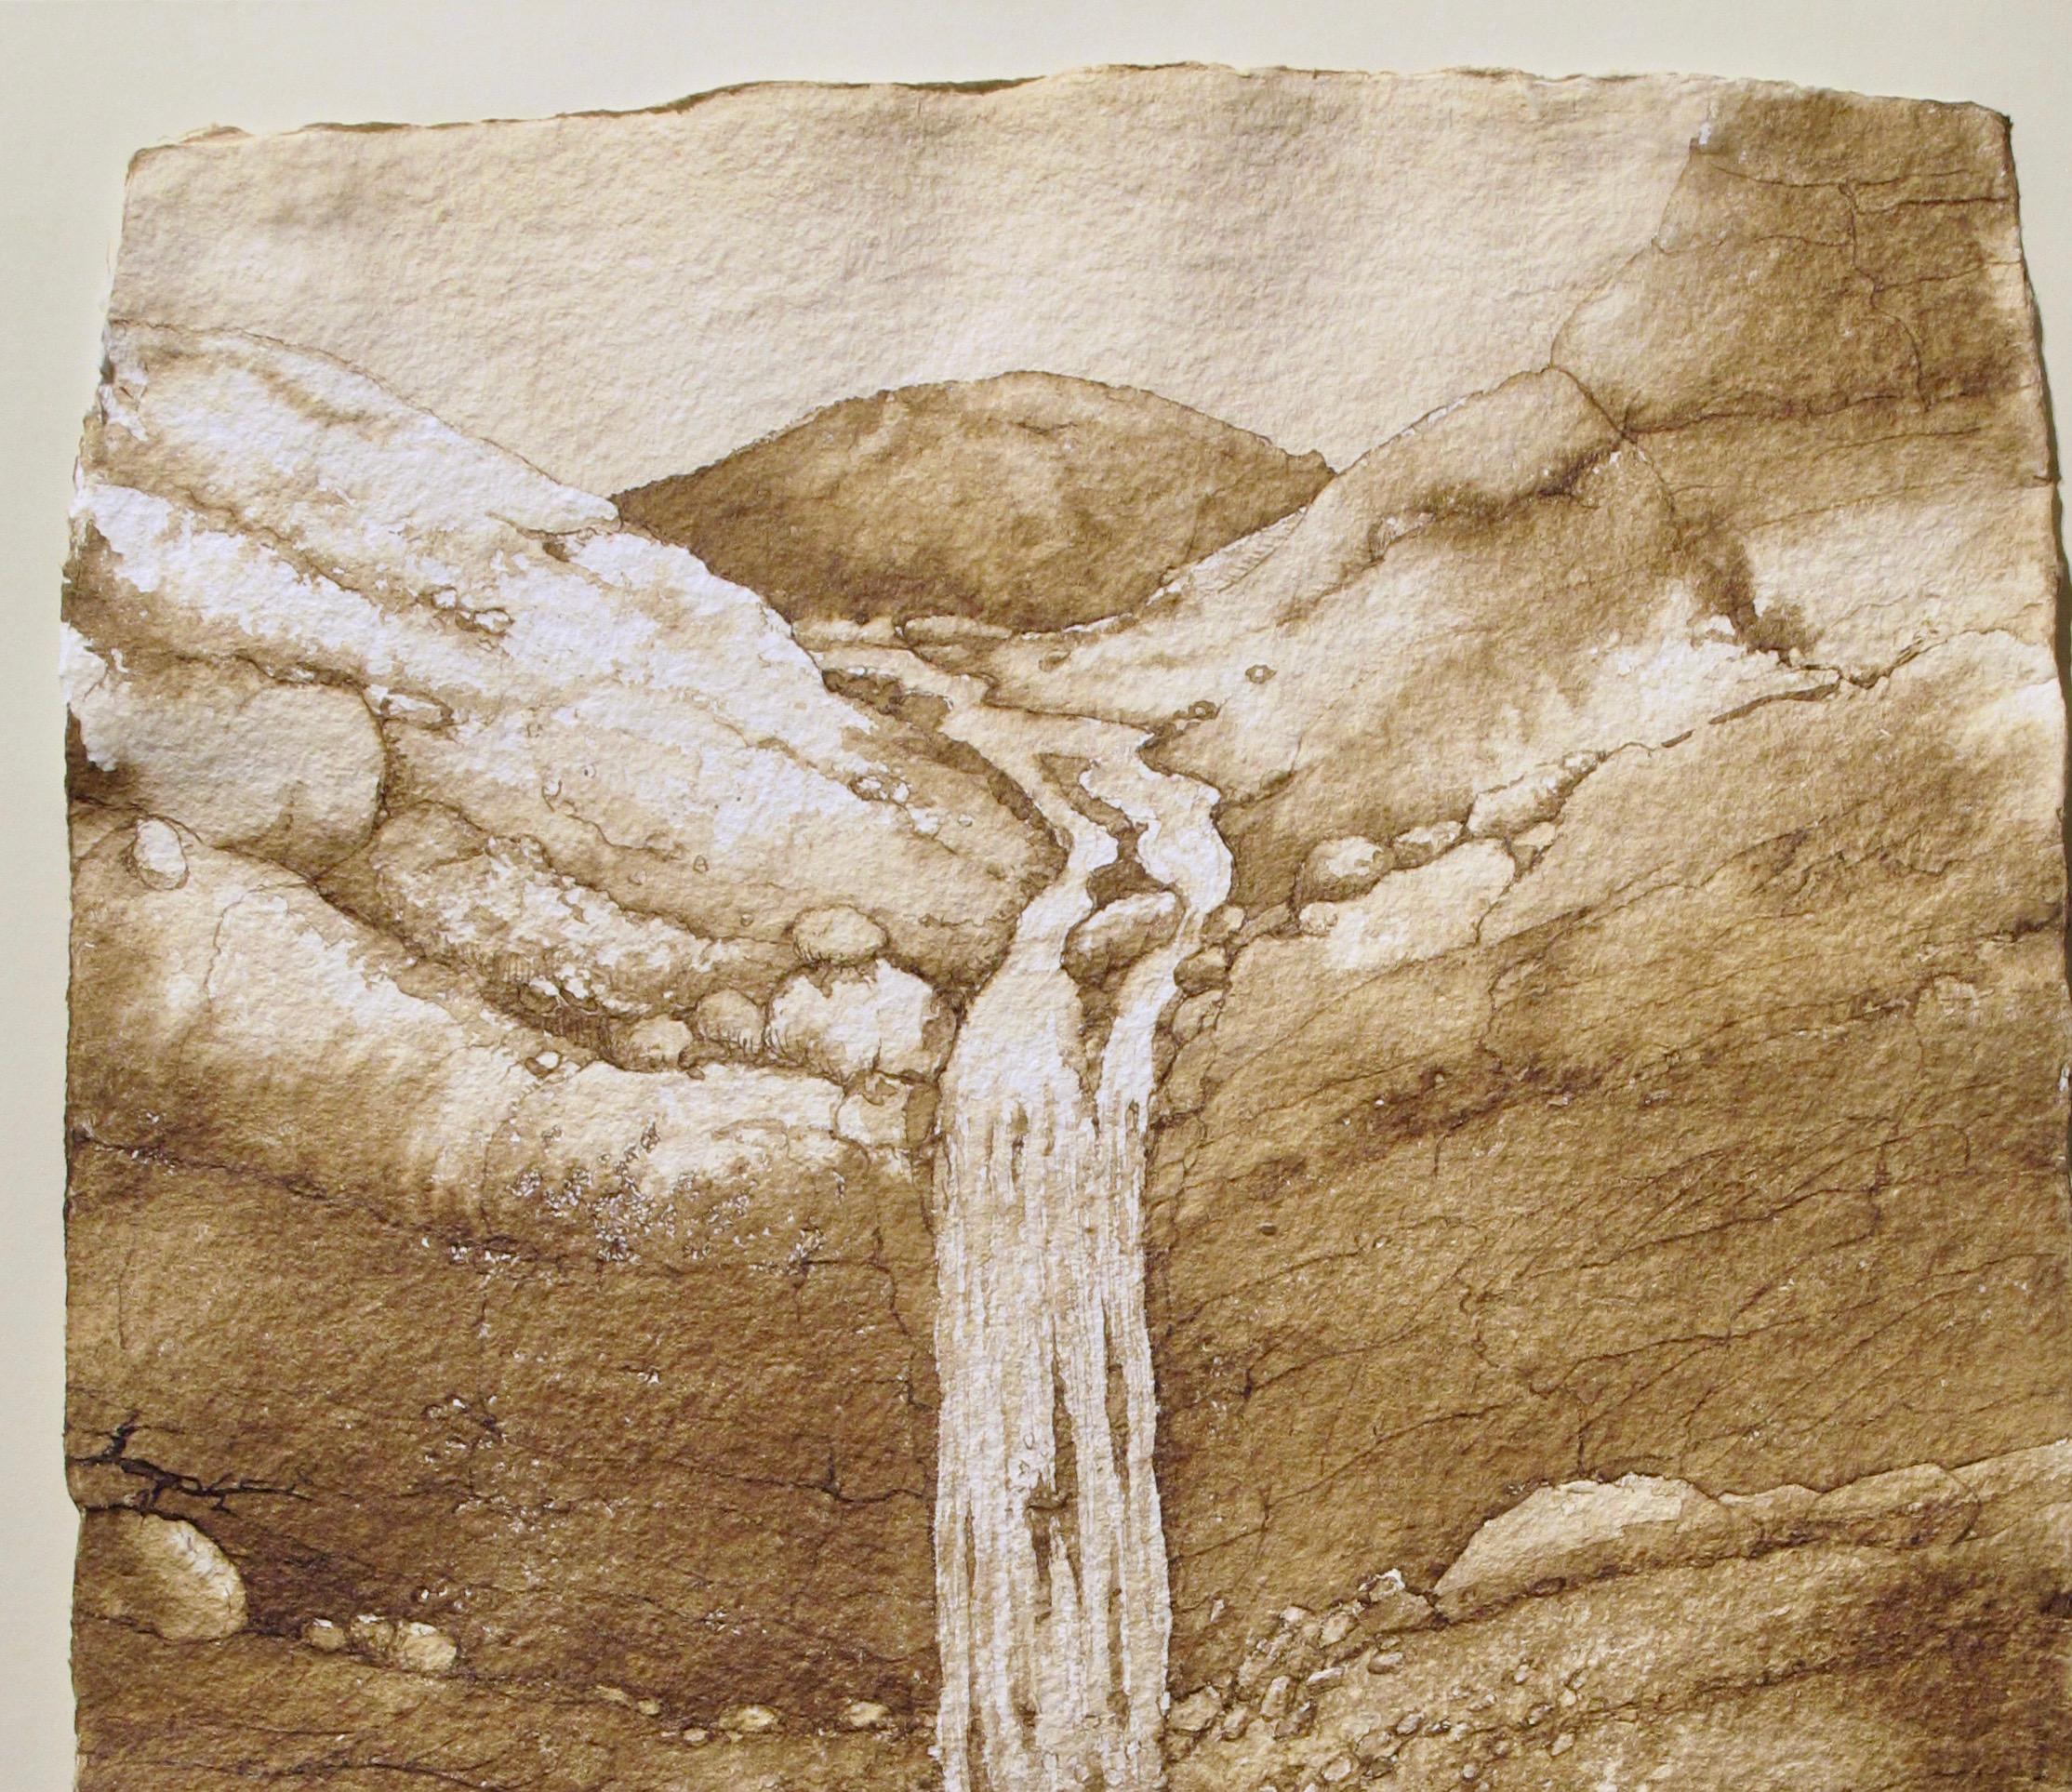 Instant Stream, walnut ink painting on handmade paper, desert landscape, brown